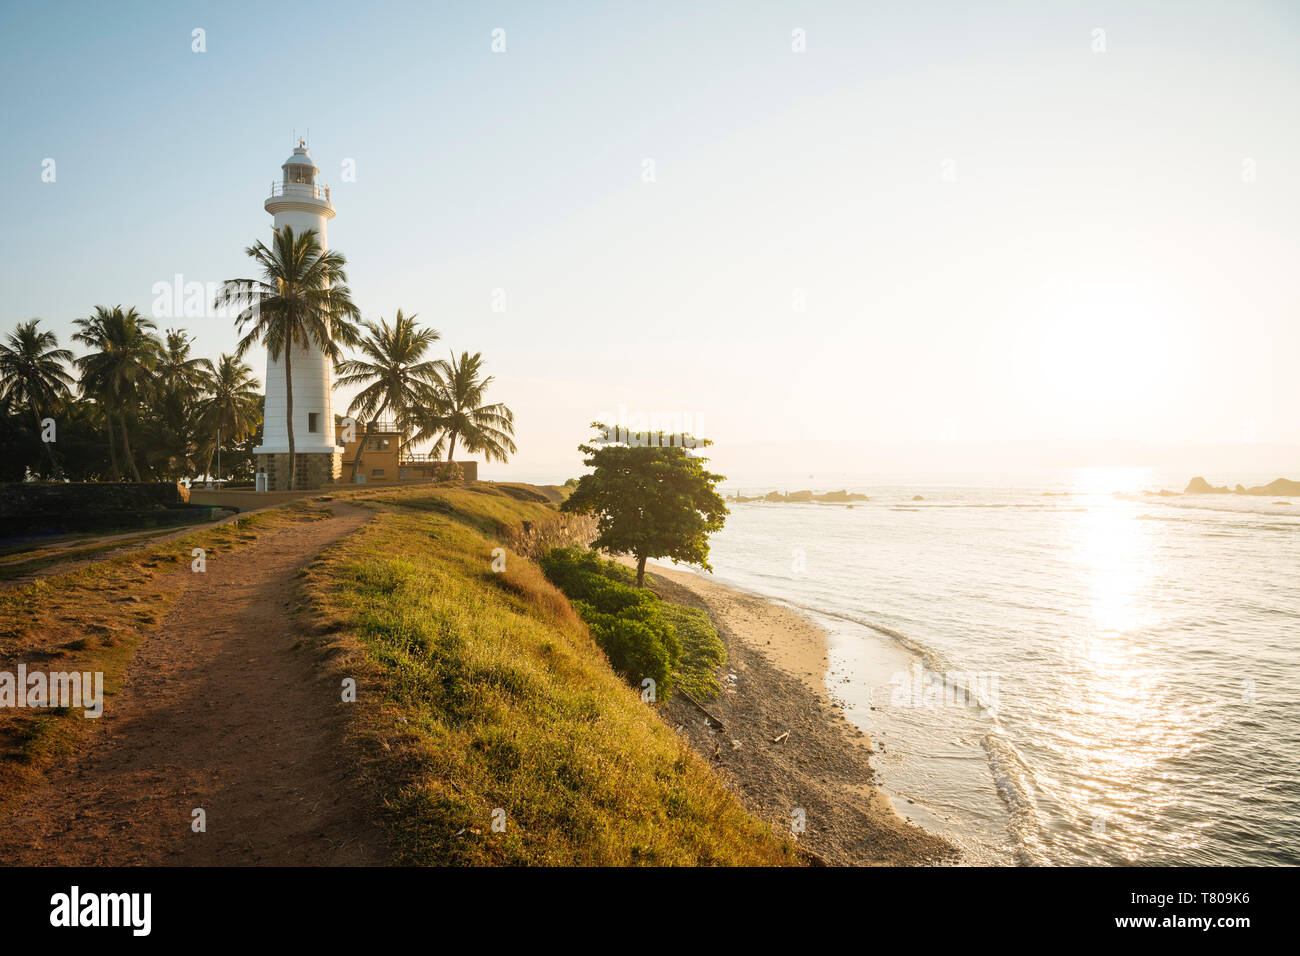 Al amanecer, Lighthouse Galle Galle, Casco antiguo, declarado Patrimonio de la Humanidad por la UNESCO, Costa Sur, Sri Lanka, Asia Foto de stock